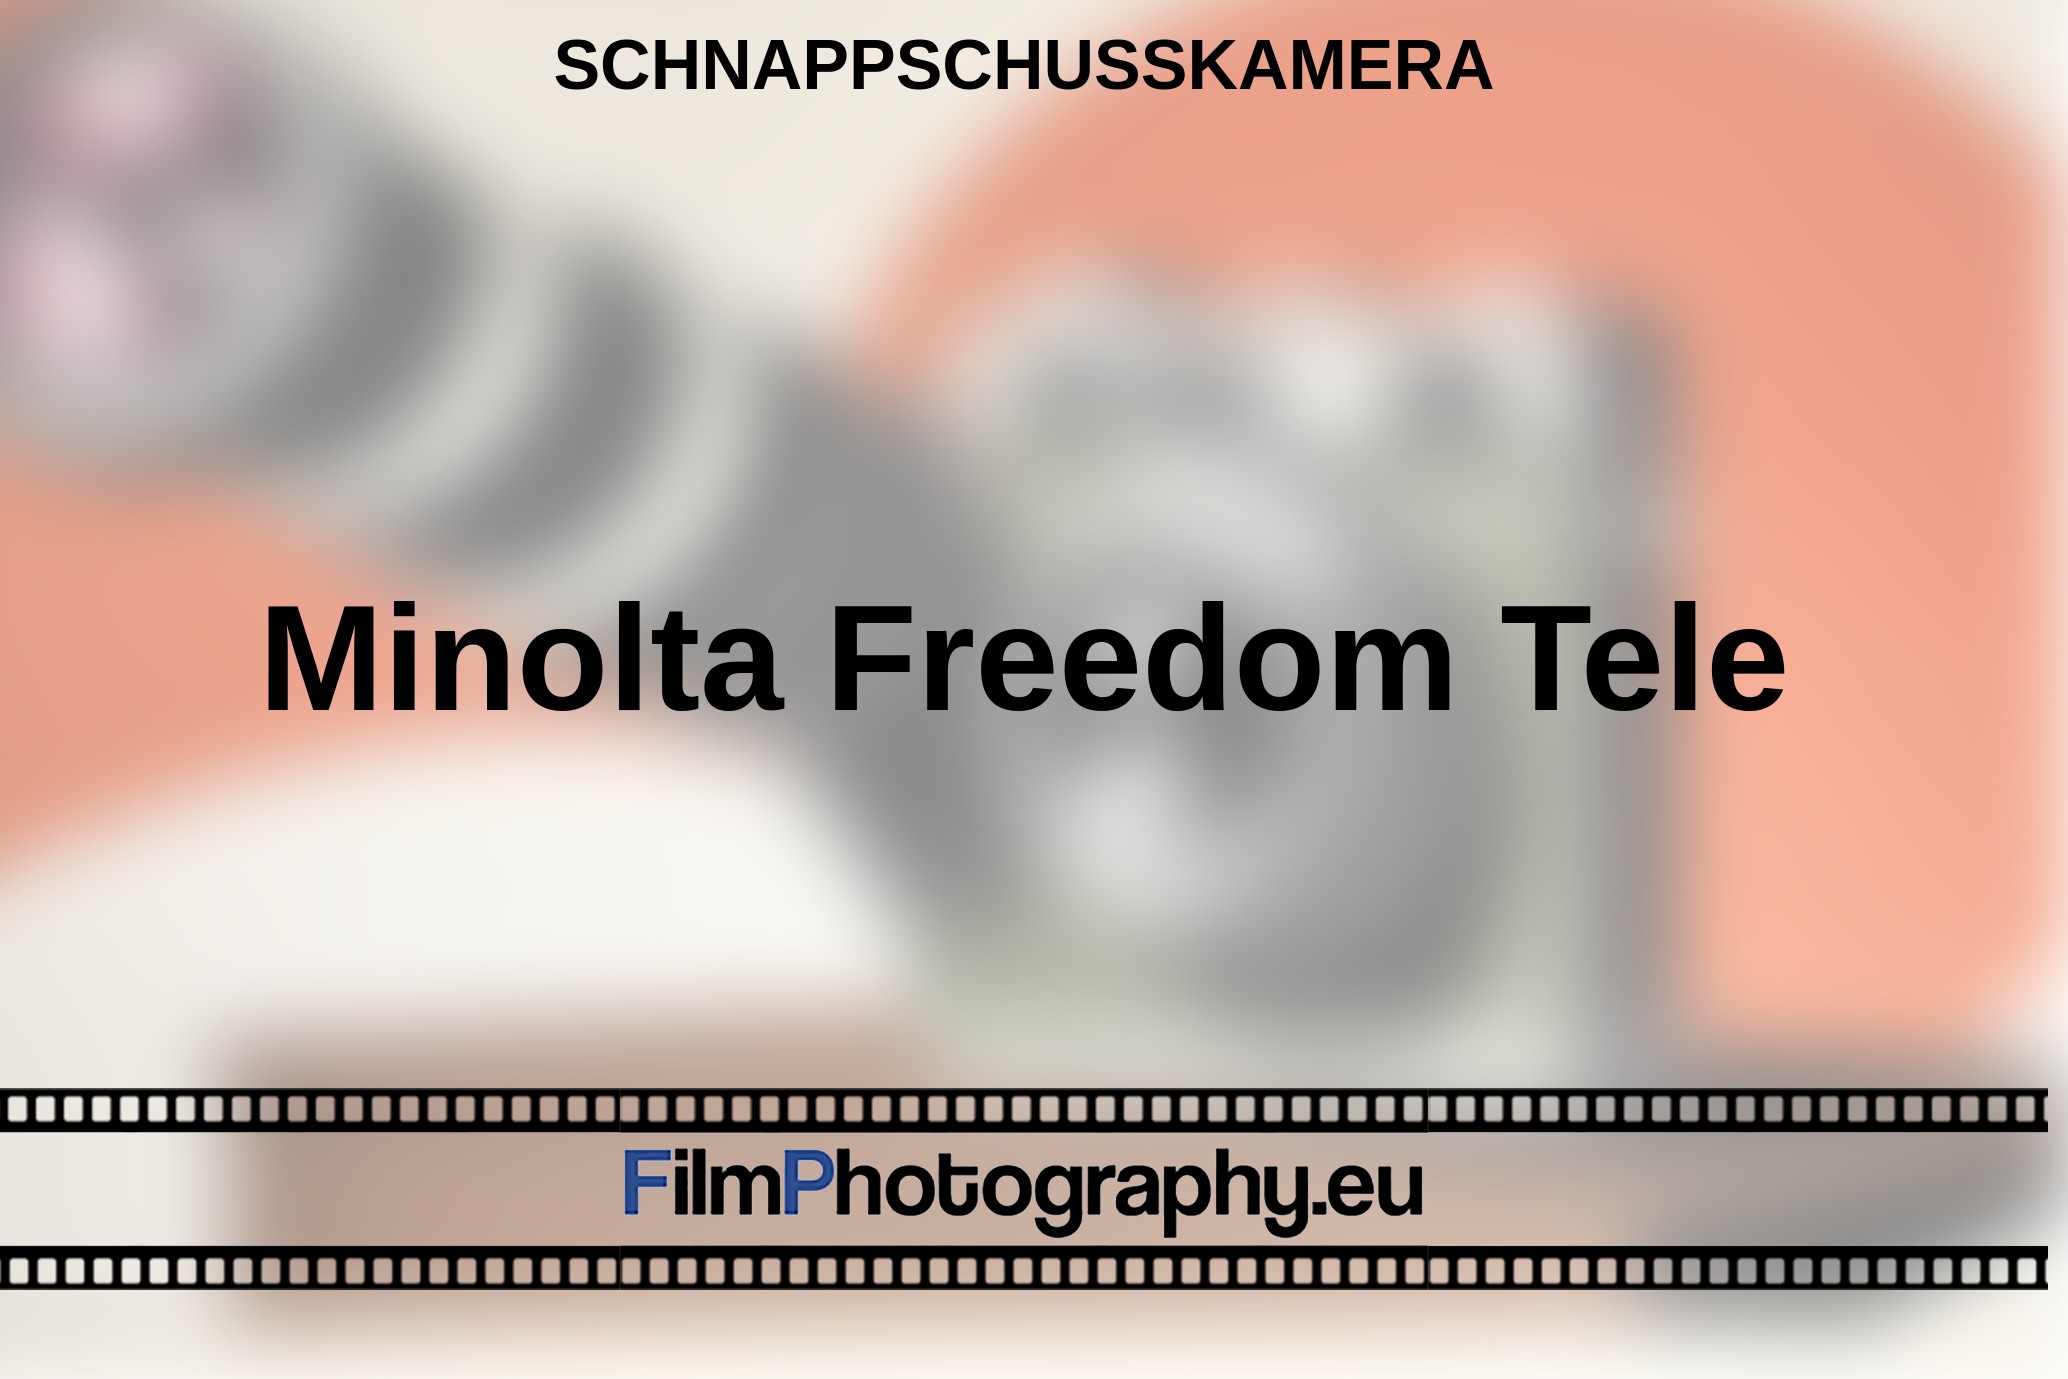 Minolta-Freedom-Tele-Schnappschusskamera-bnv.jpg